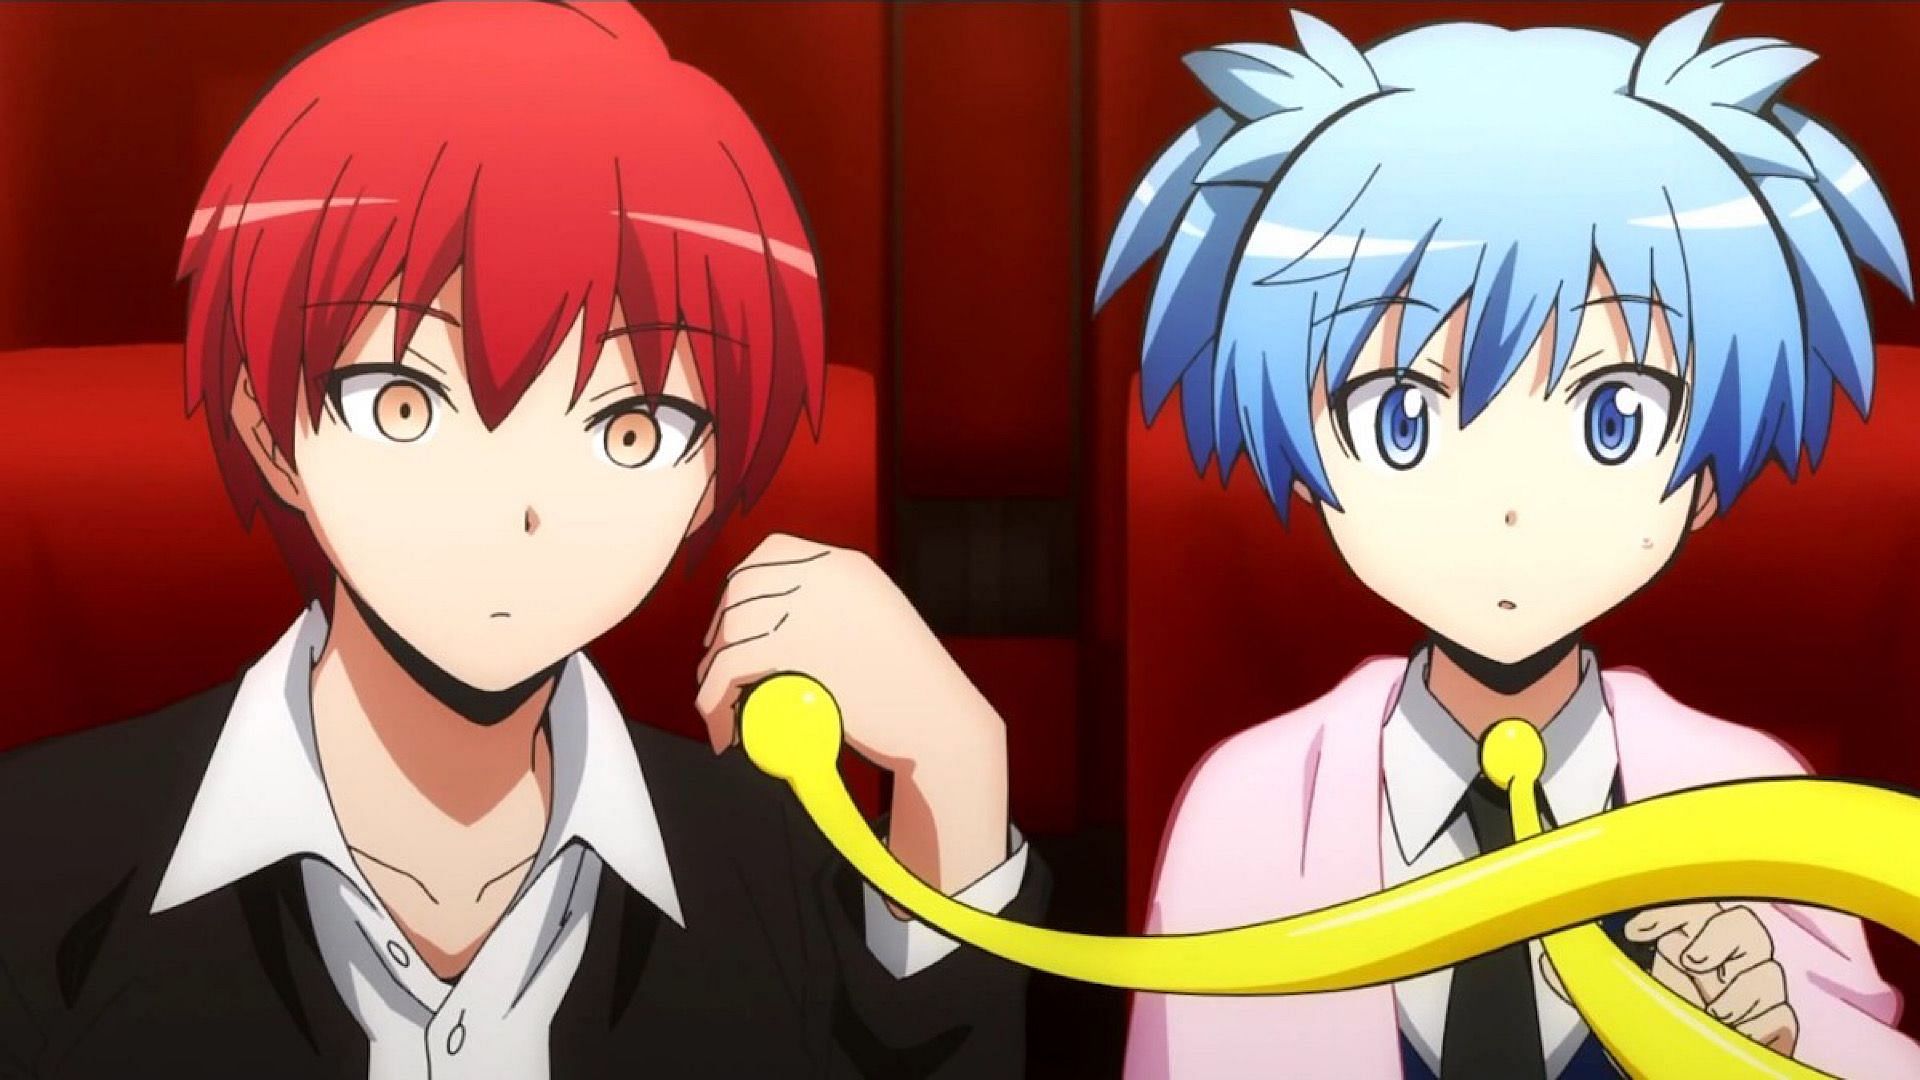 Akabane loves violence in the Assassination Classroom anime (Image via Lerche)